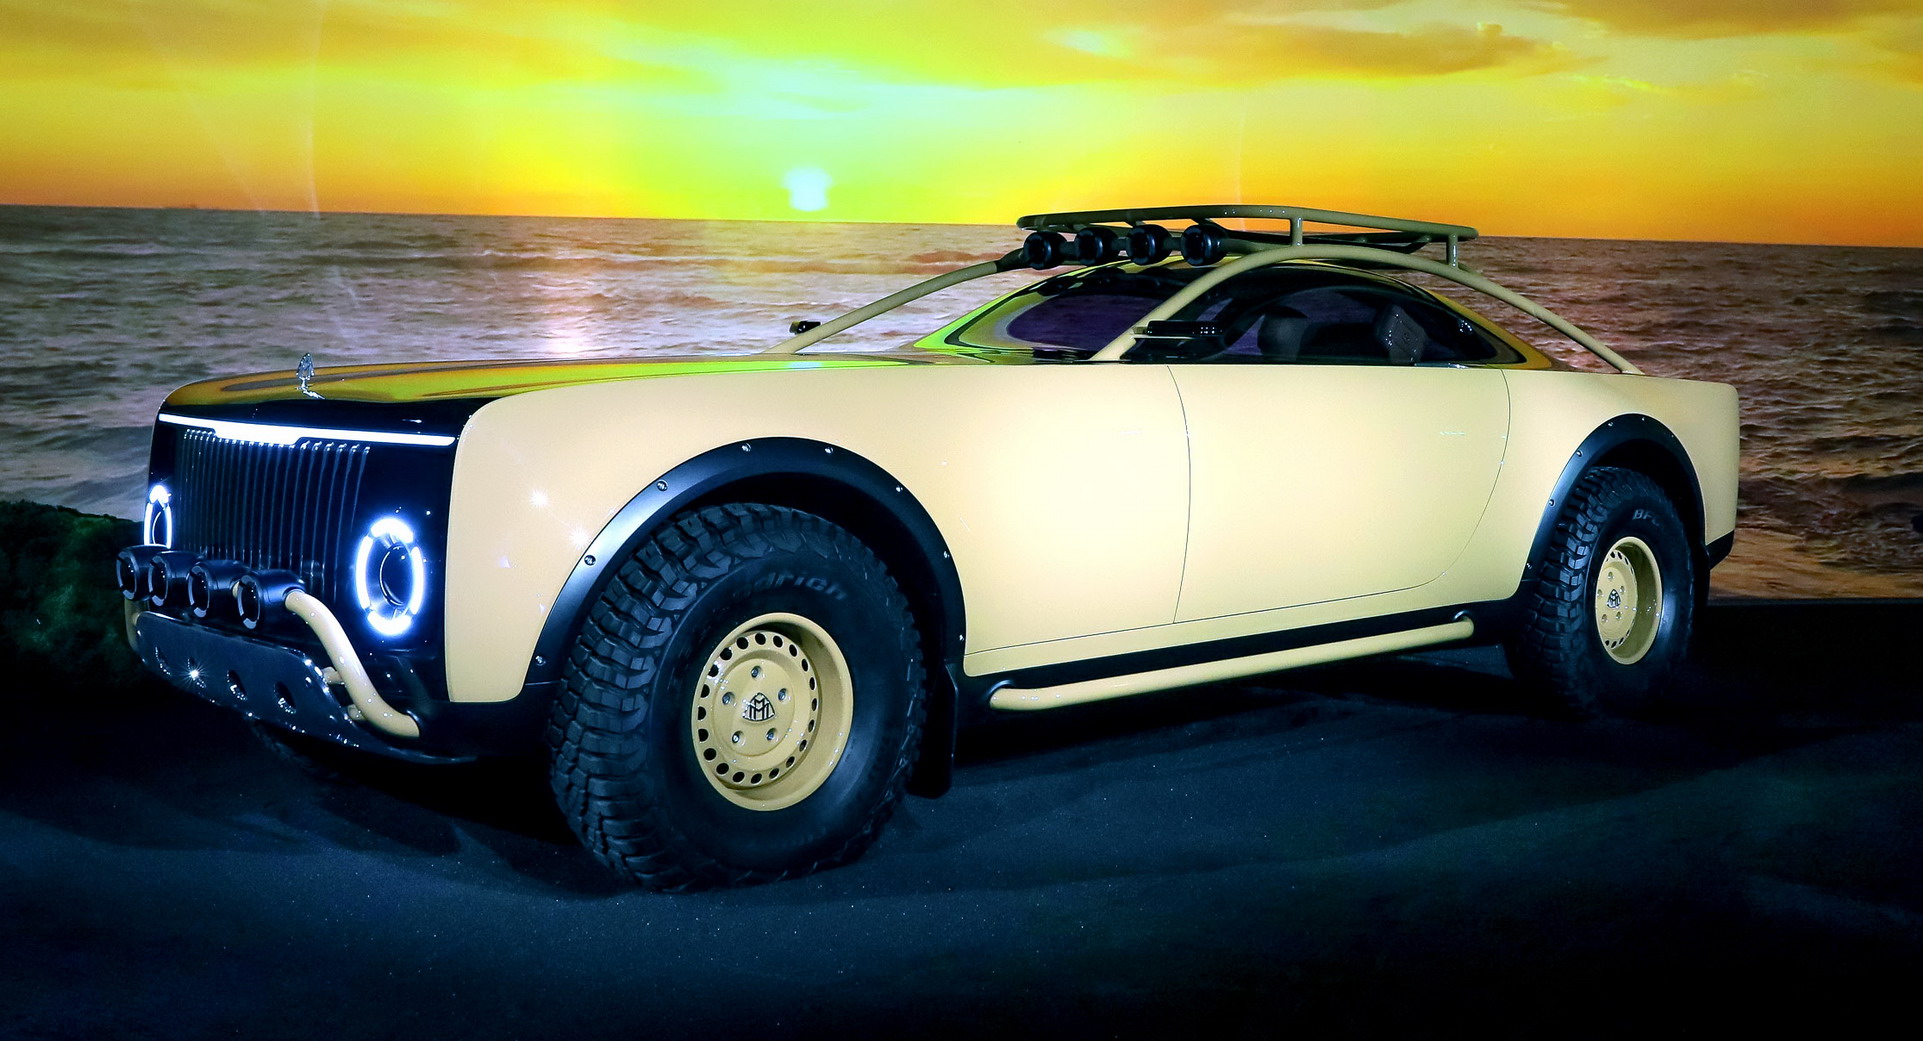 Mercedes-Benz unveils solar-powered car designed by Virgil Abloh